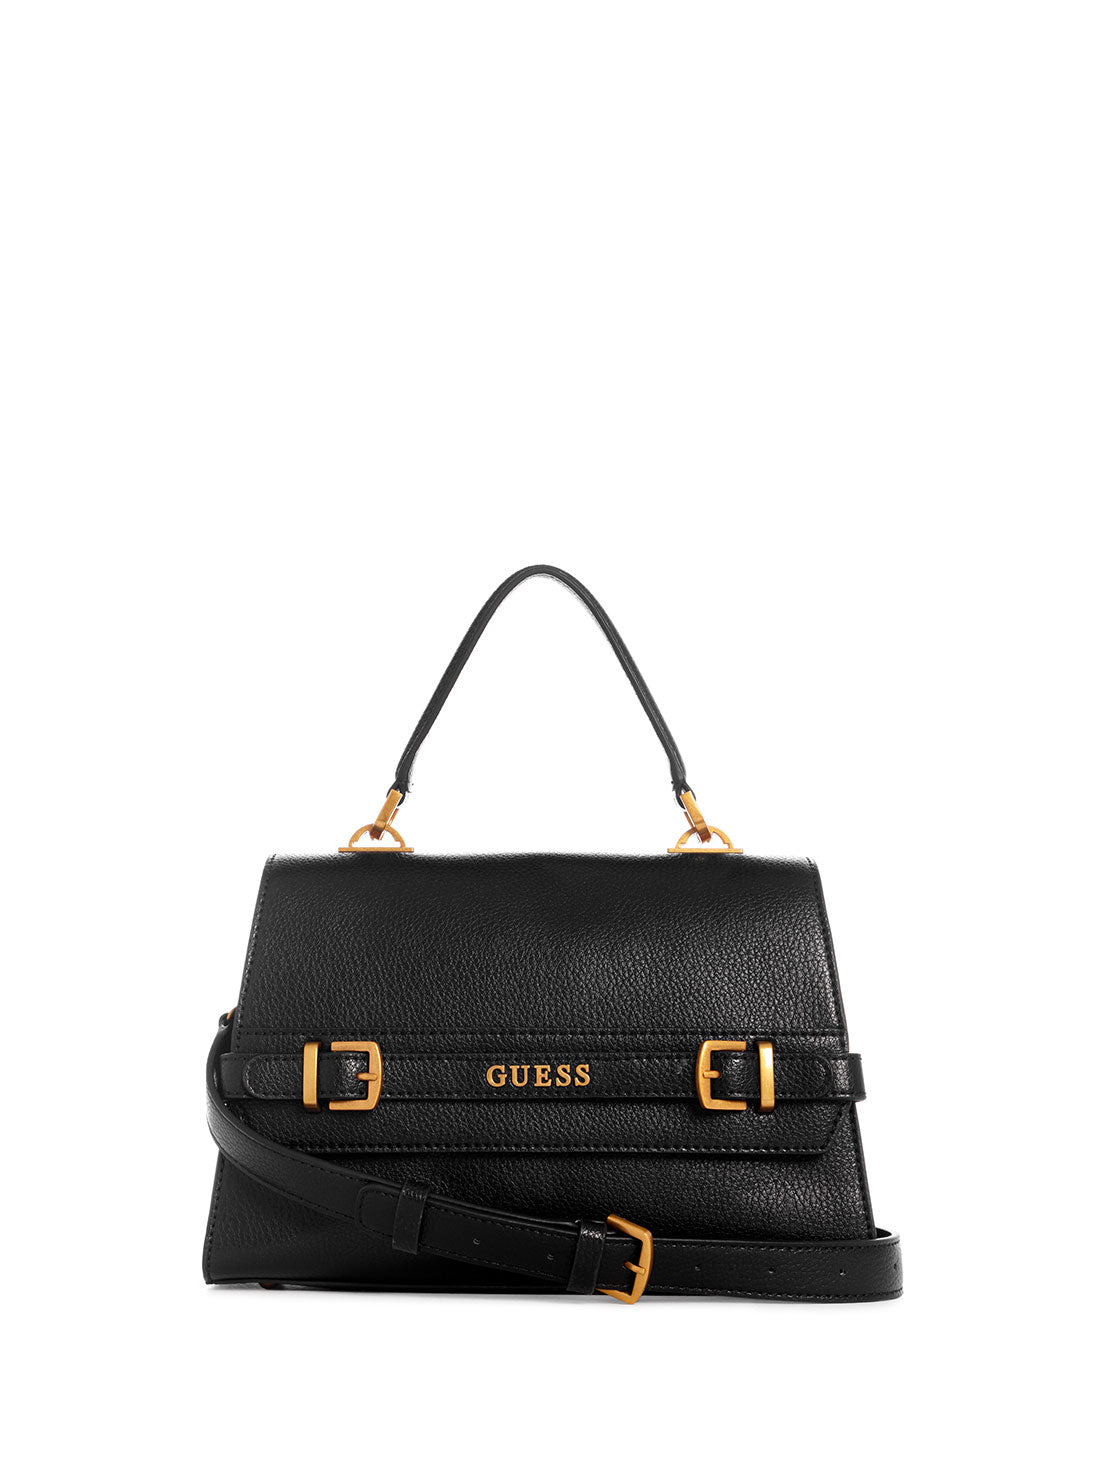 GUESS Women's Black Sestri Crossbody Bag BB898520 Front View